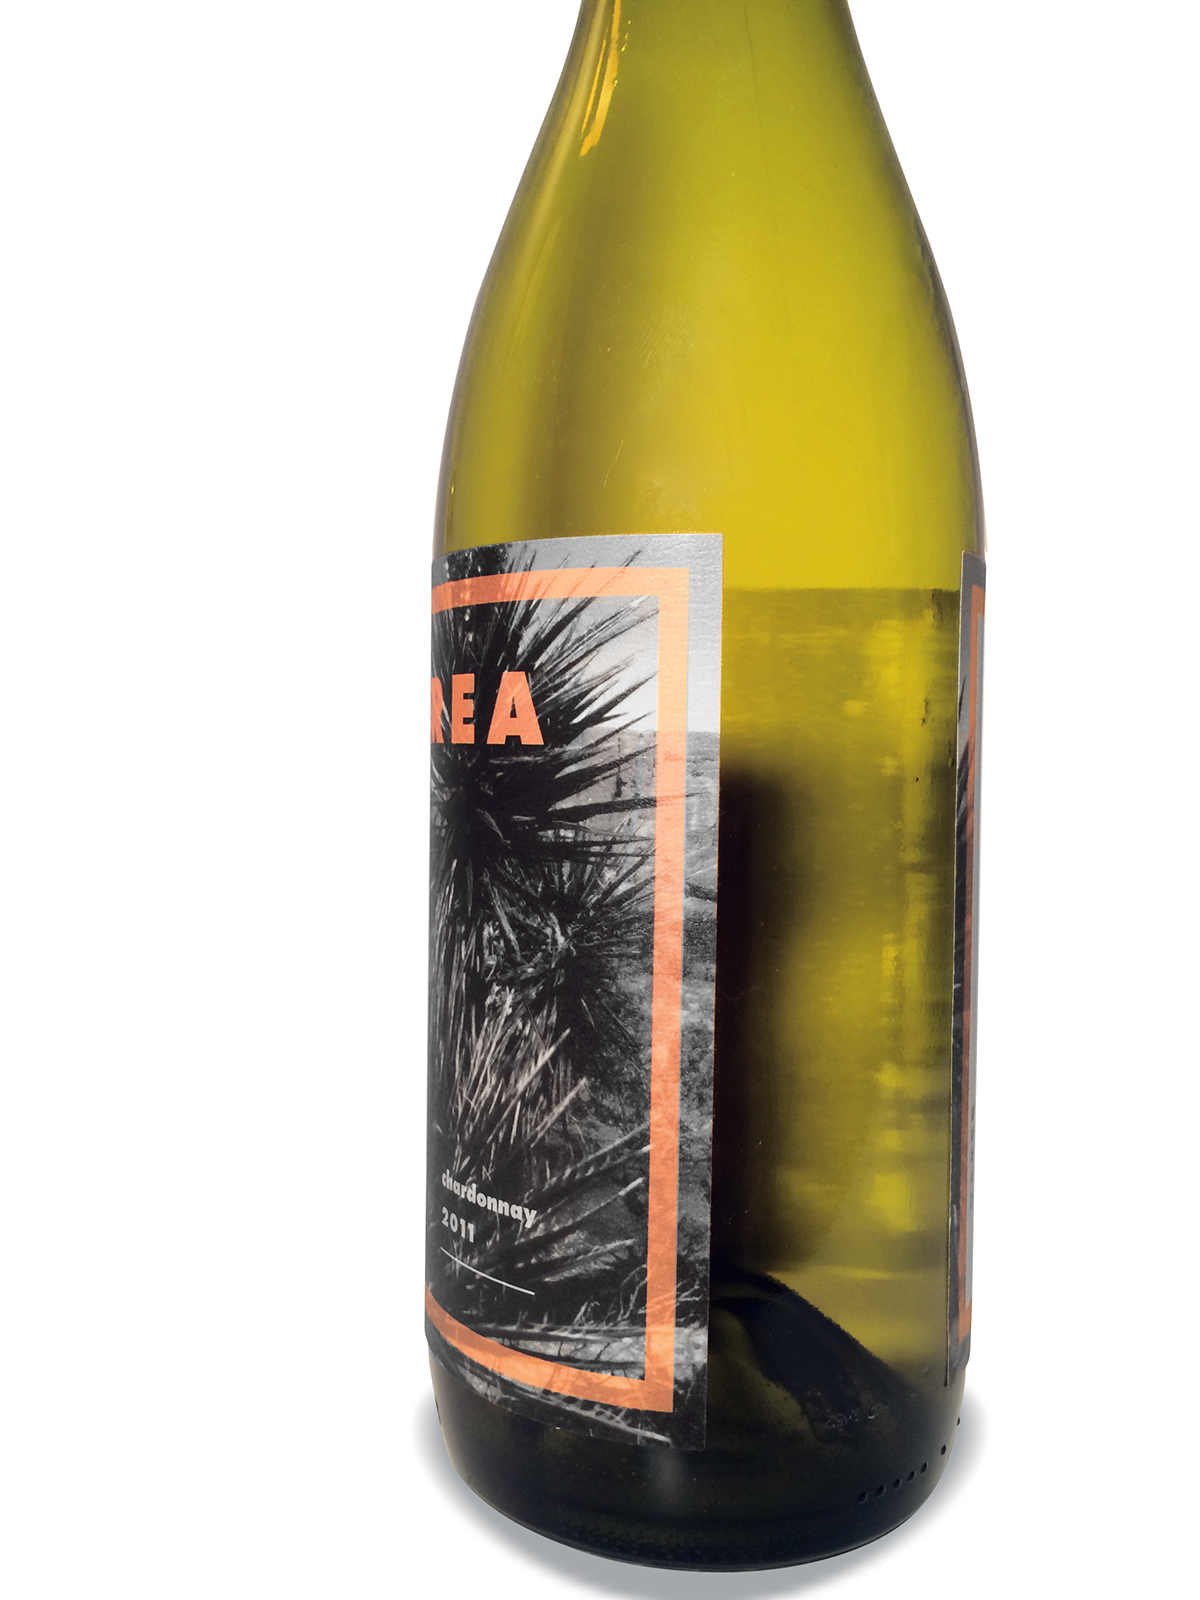 Adobe Portfolio wine Wine Labels Wine Bottle label design California Chardonnay labels